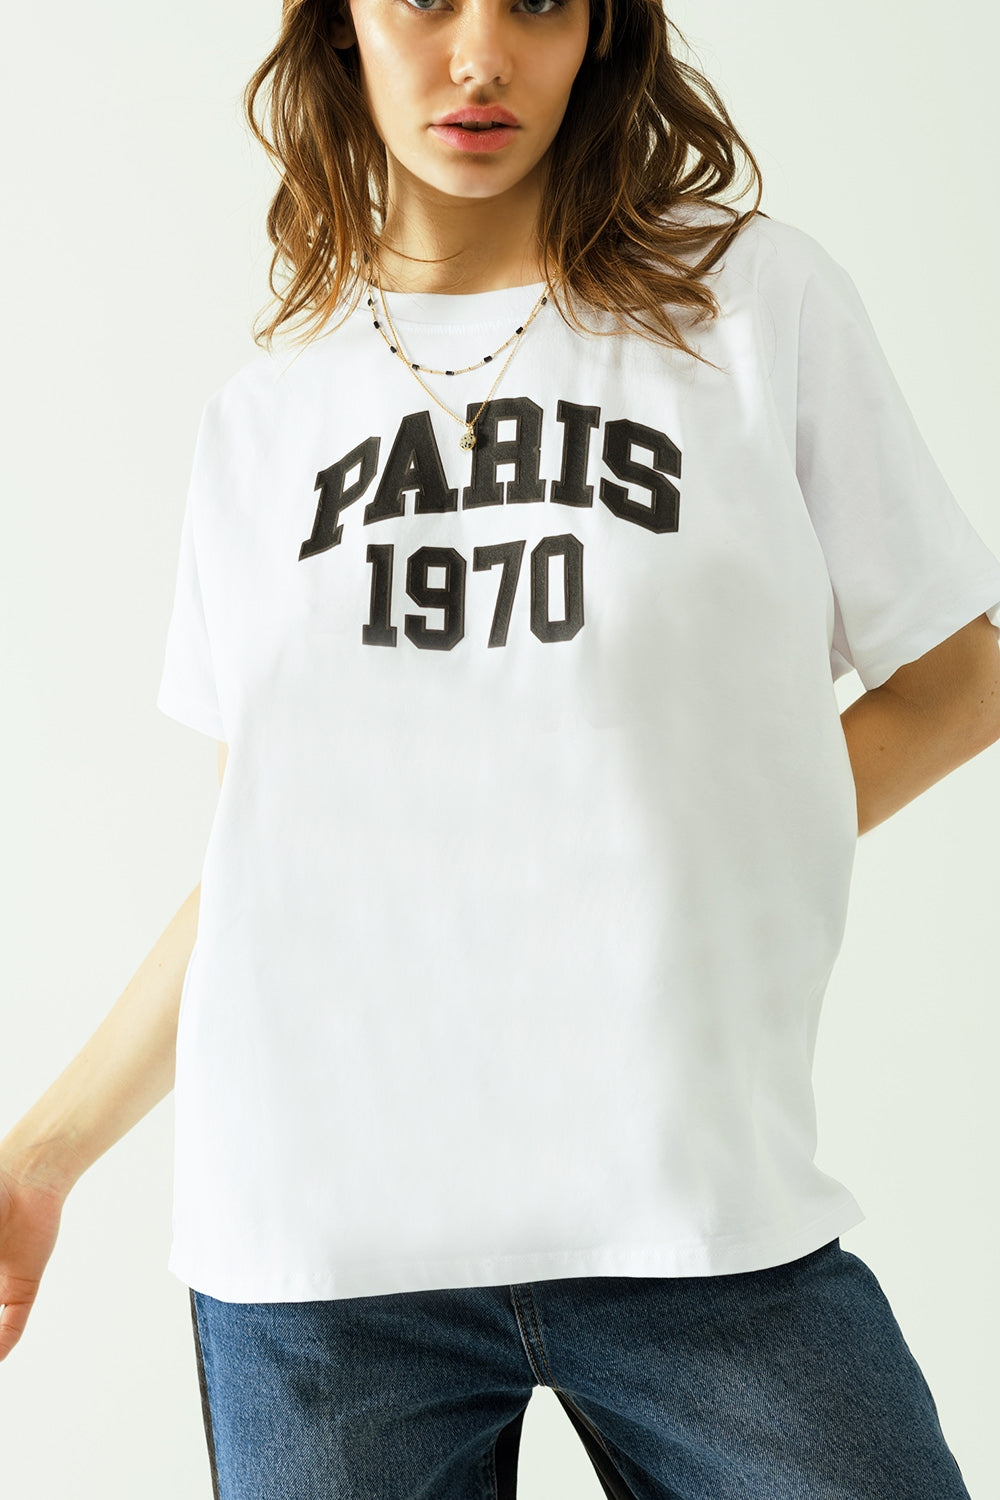 Q2 Oversize white t-shirt printed paris 1970 in black